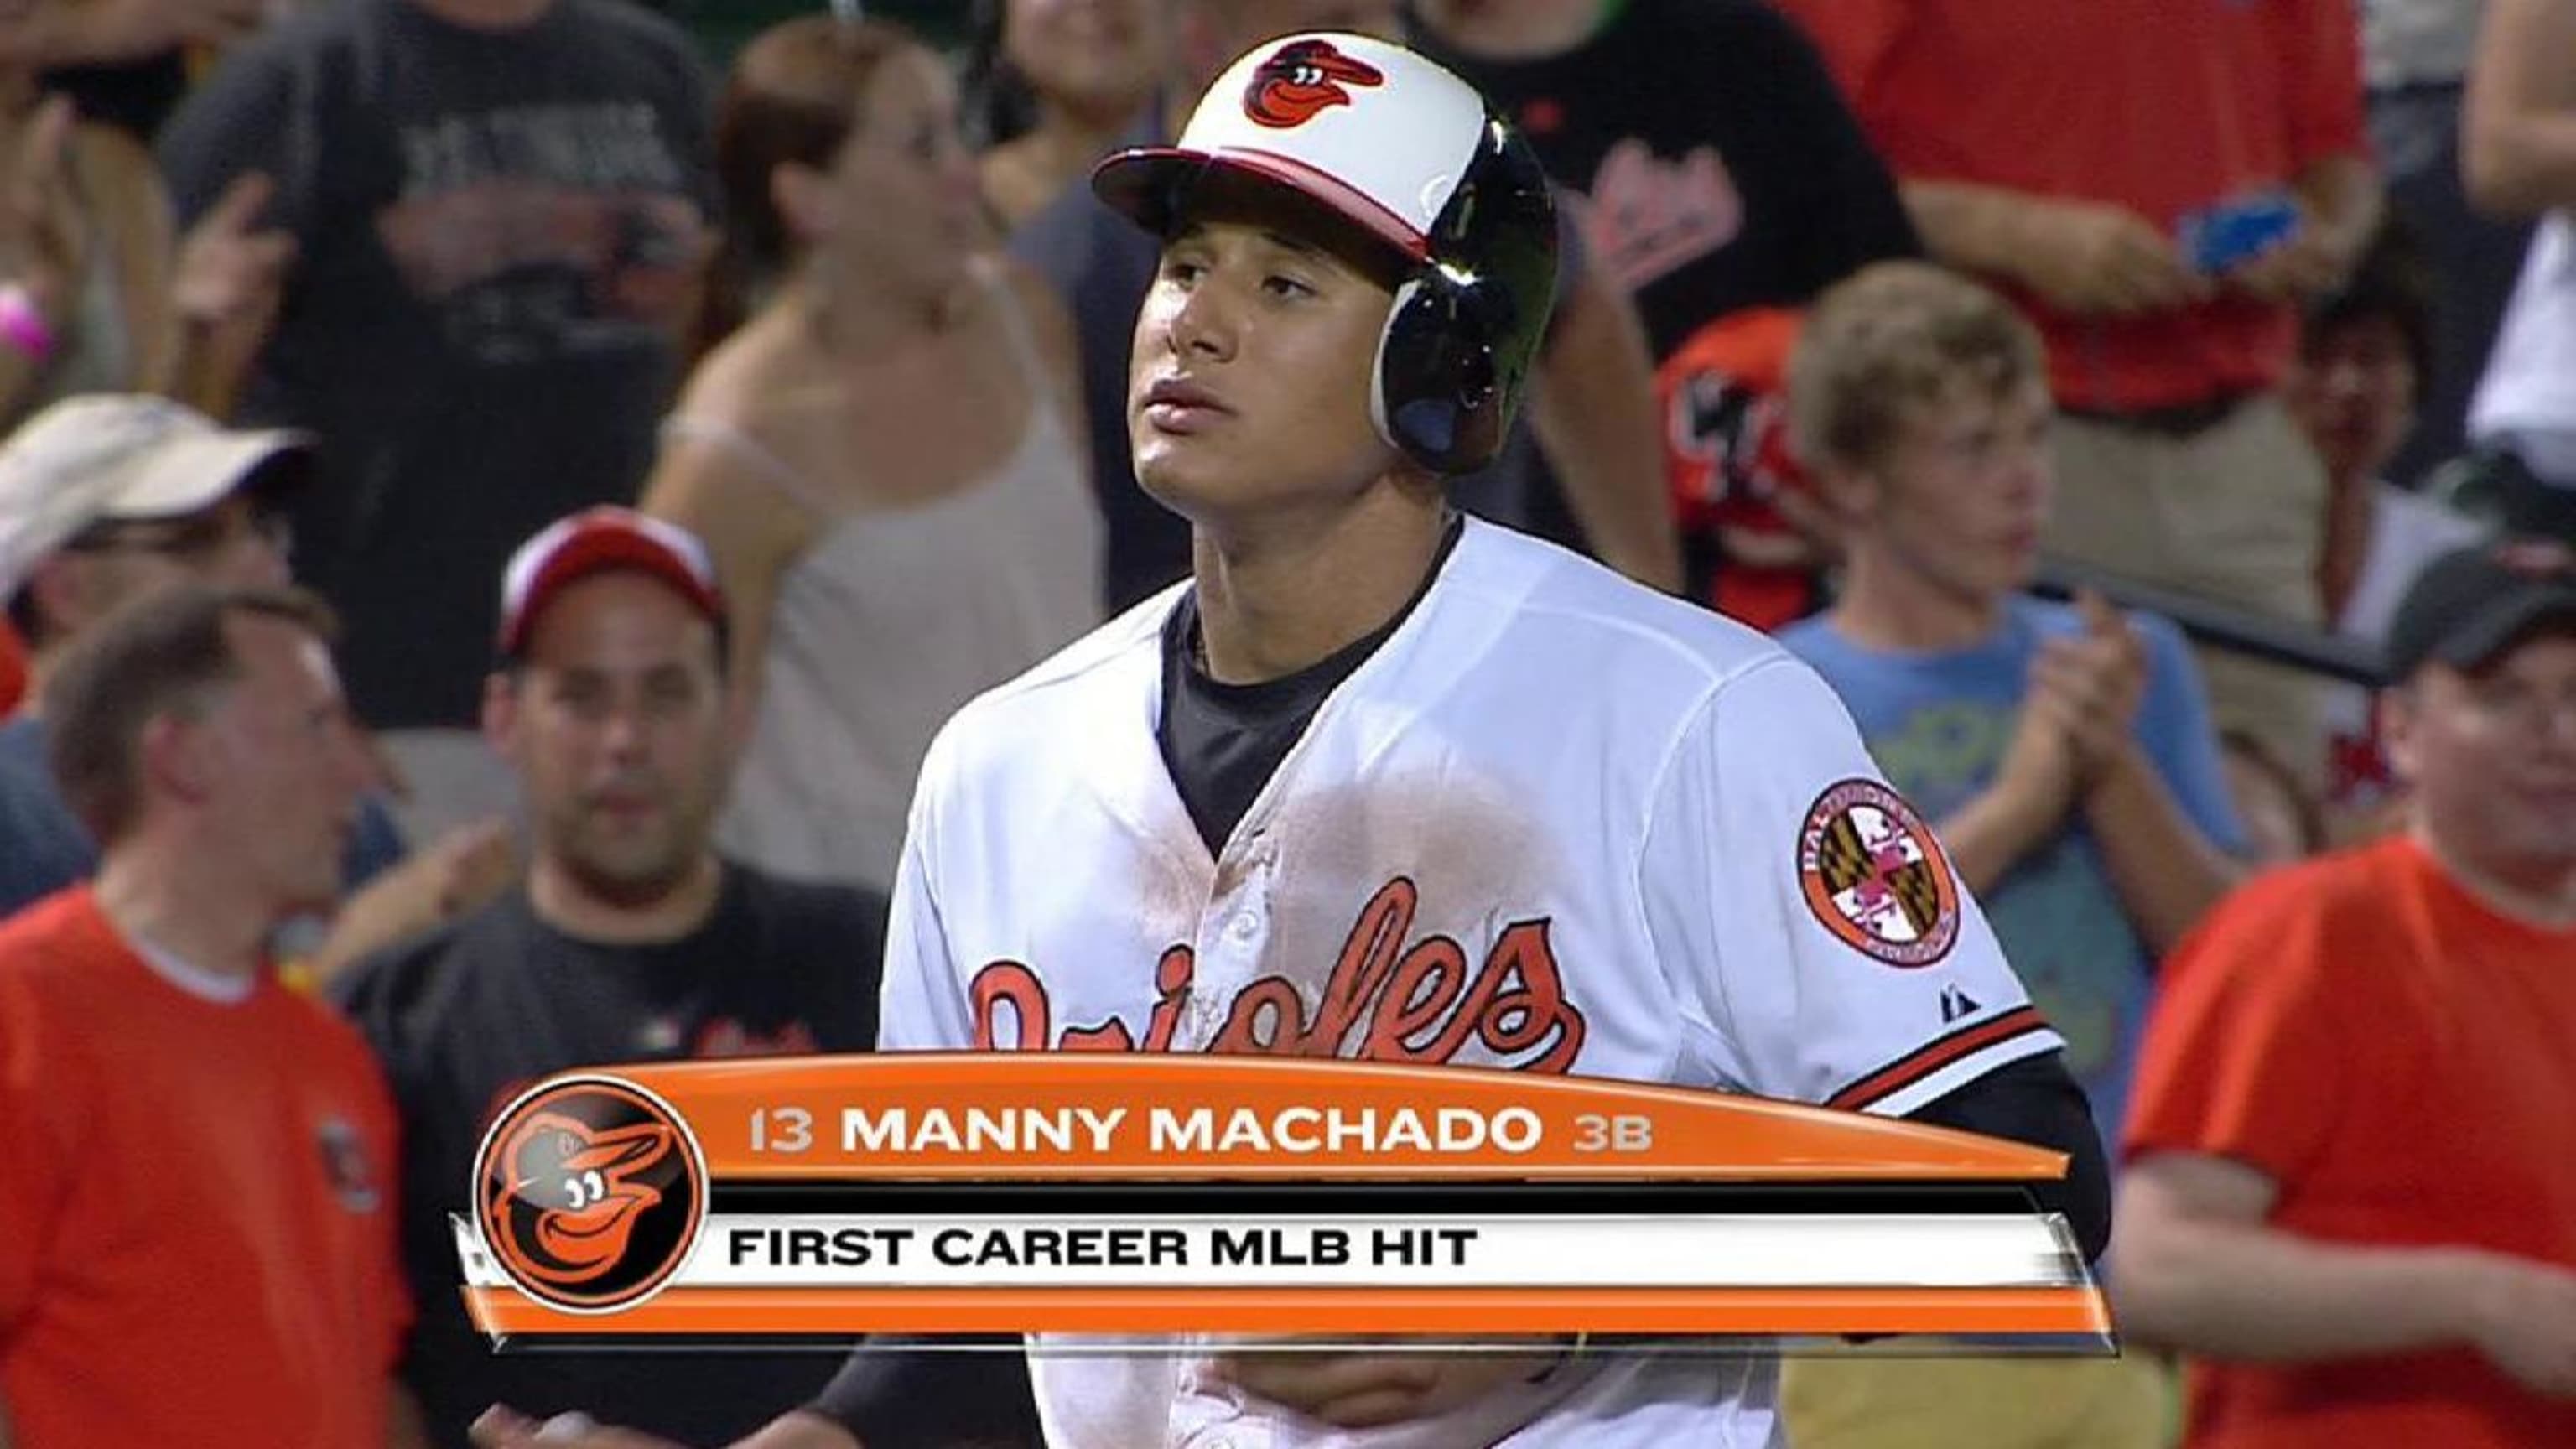 Machado's first career hit